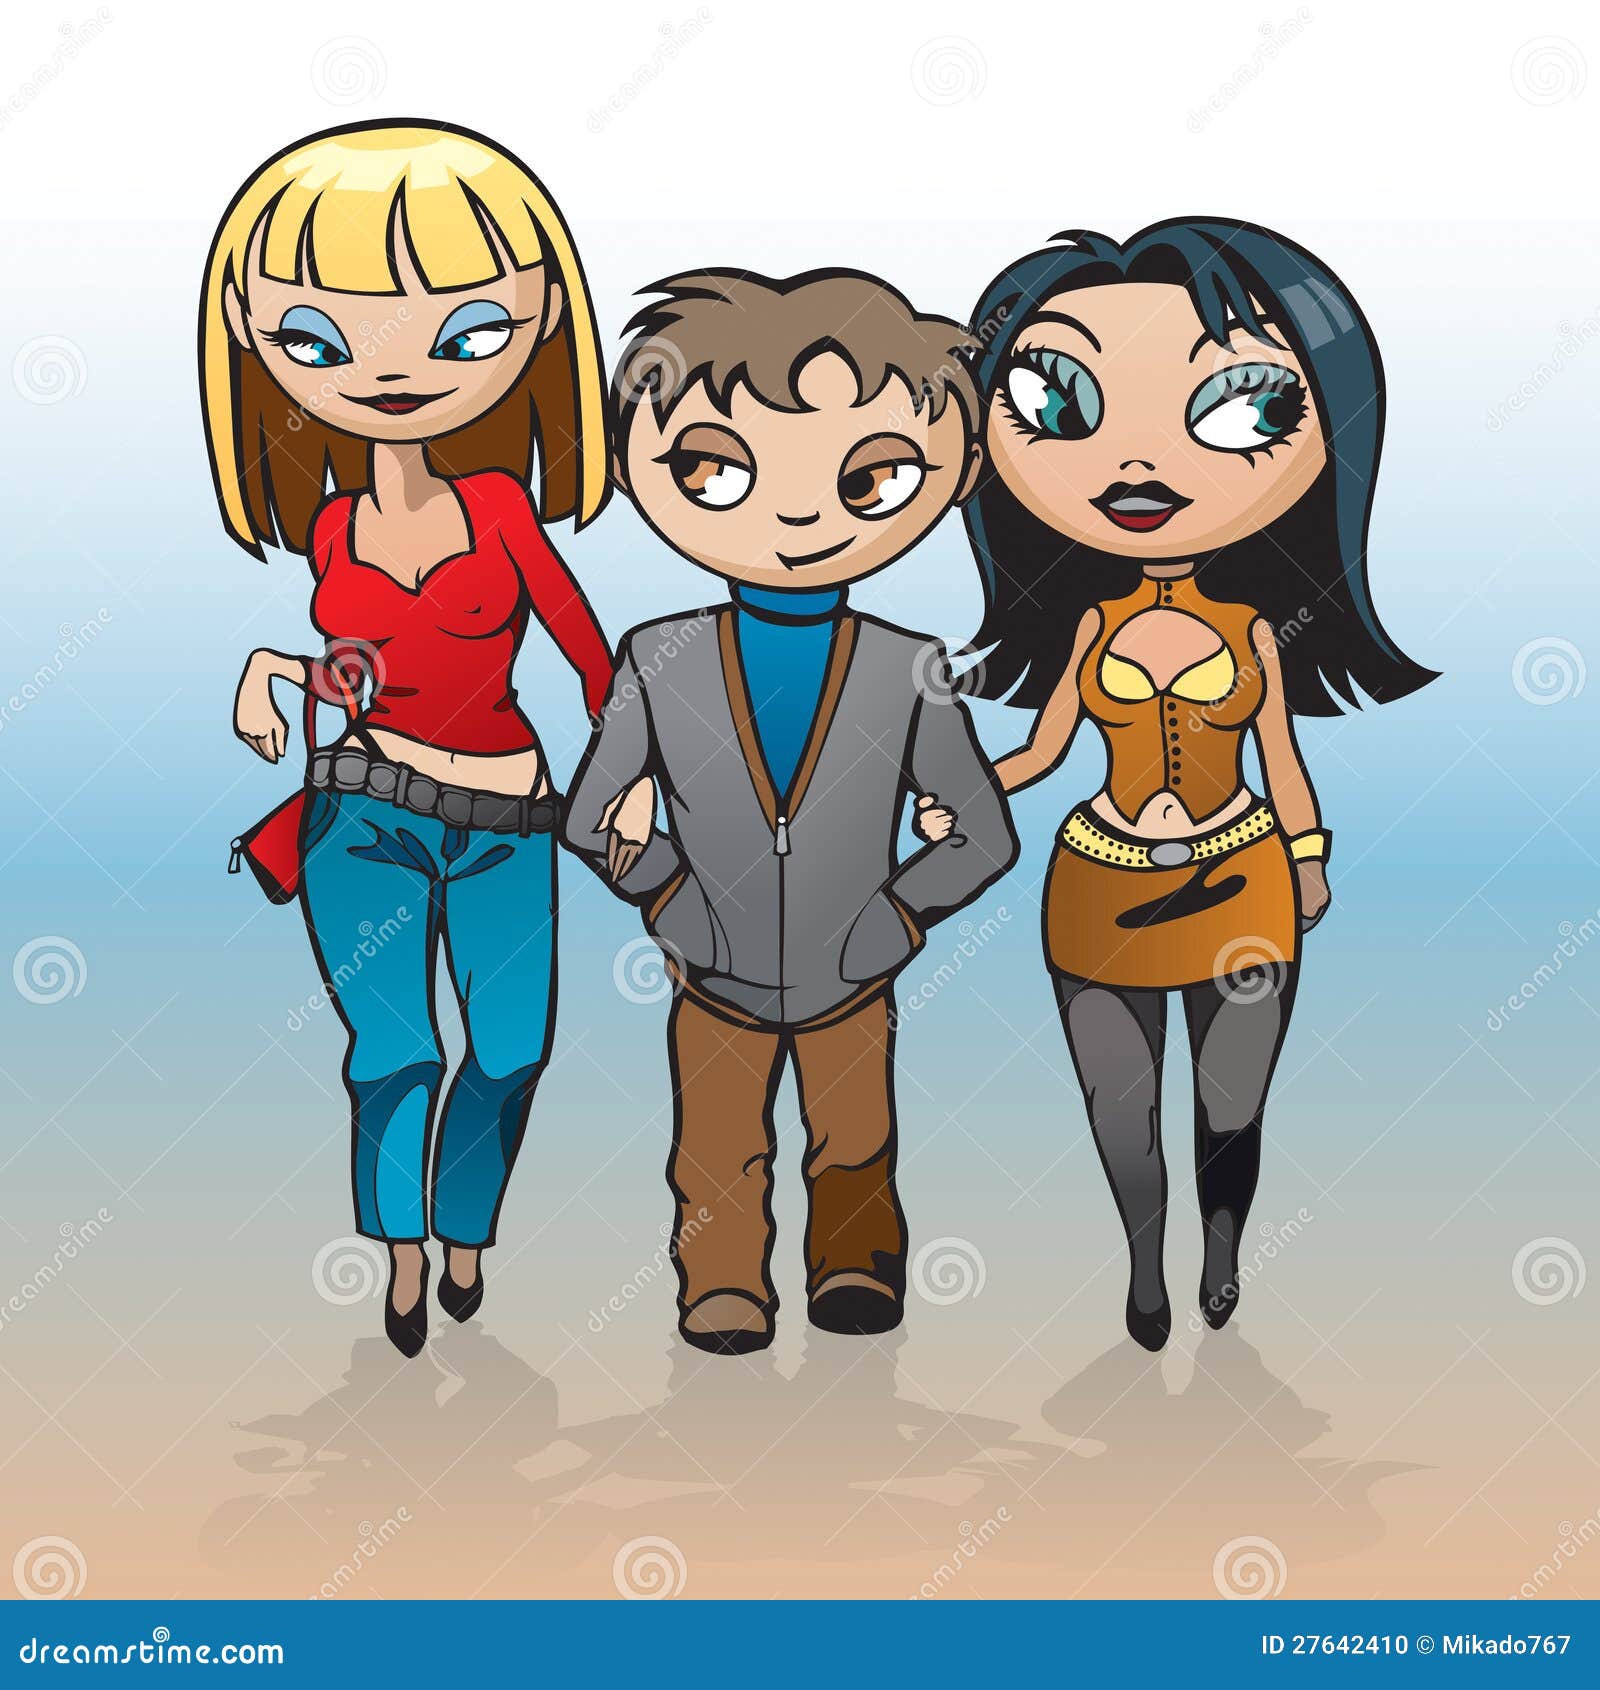 Boy And Two Girls Illustration 27642410 - Megapixl